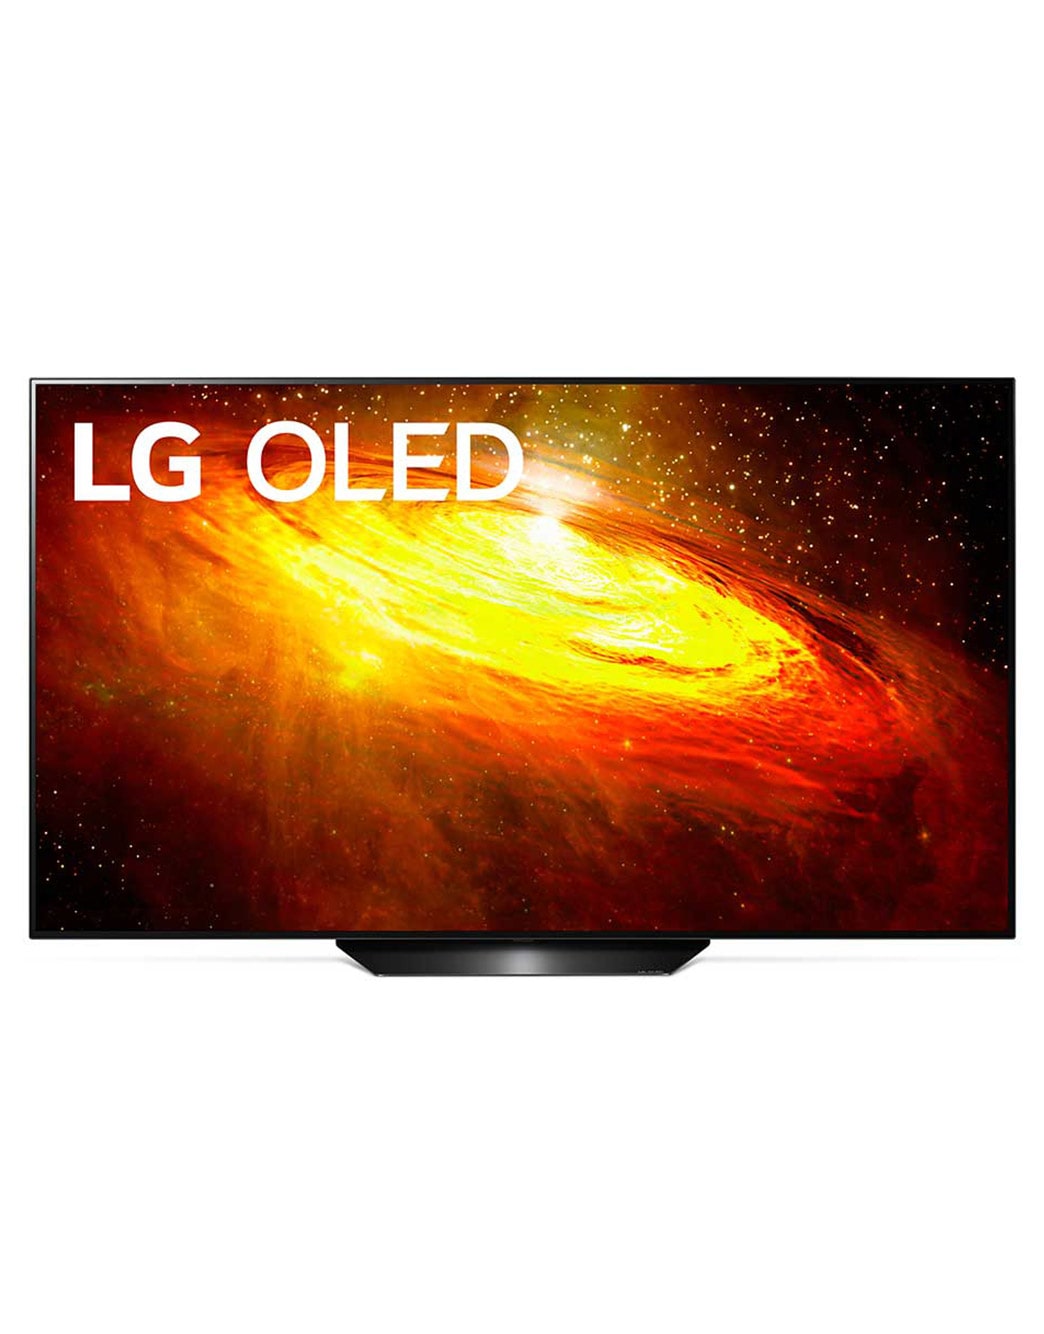 LG OLED TV 55 Inch BX Series - 4K Cinema HDR | LG UAE